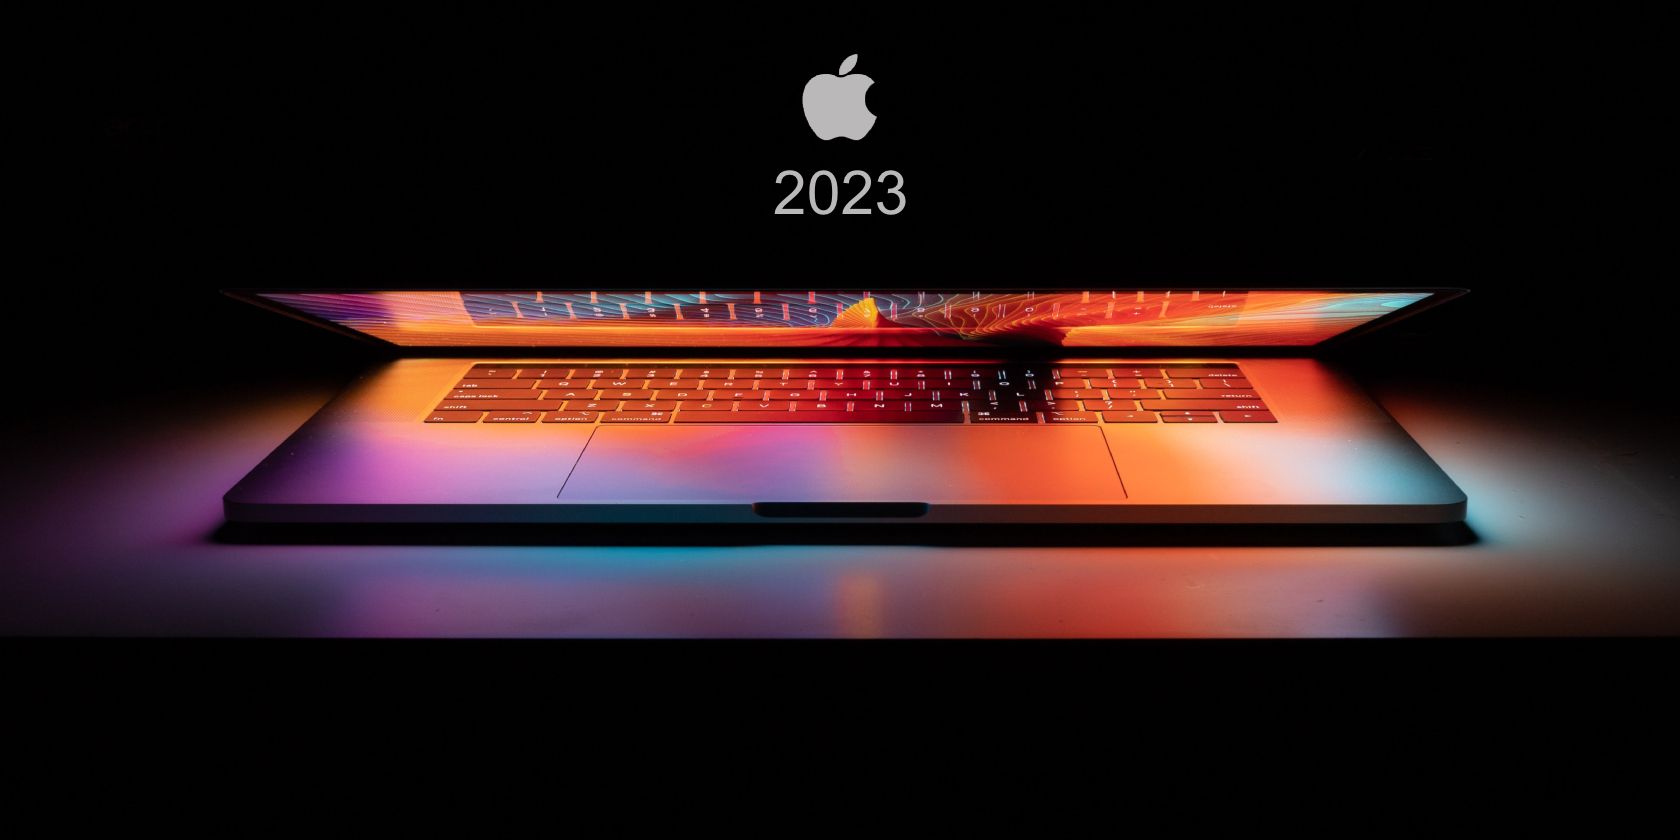 Feature image with half closed MacBook underneath Apple logo 2023